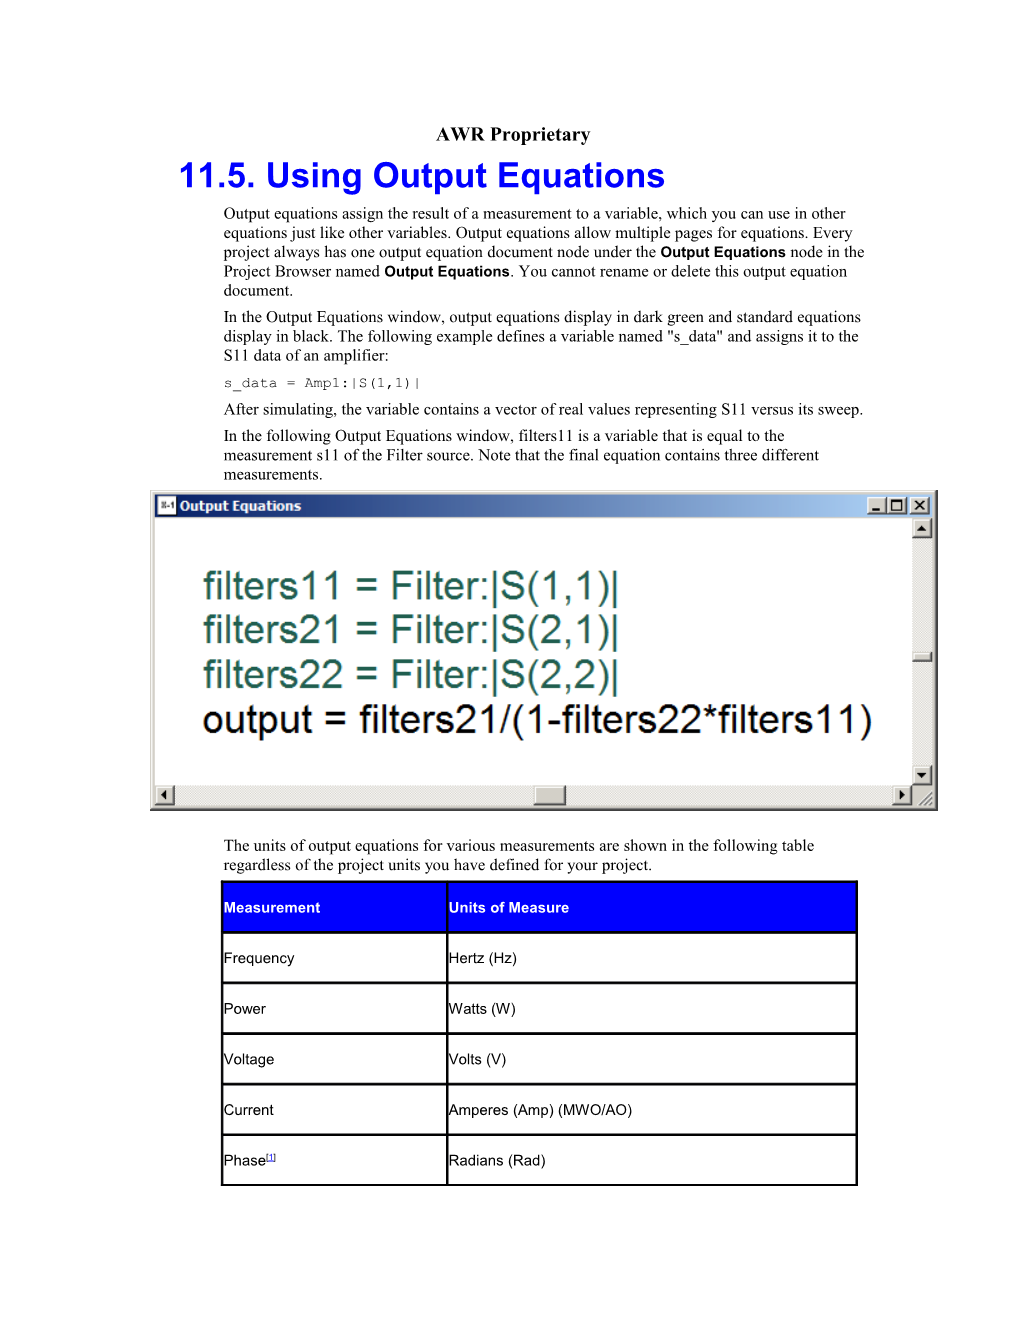 11.5.Using Output Equations